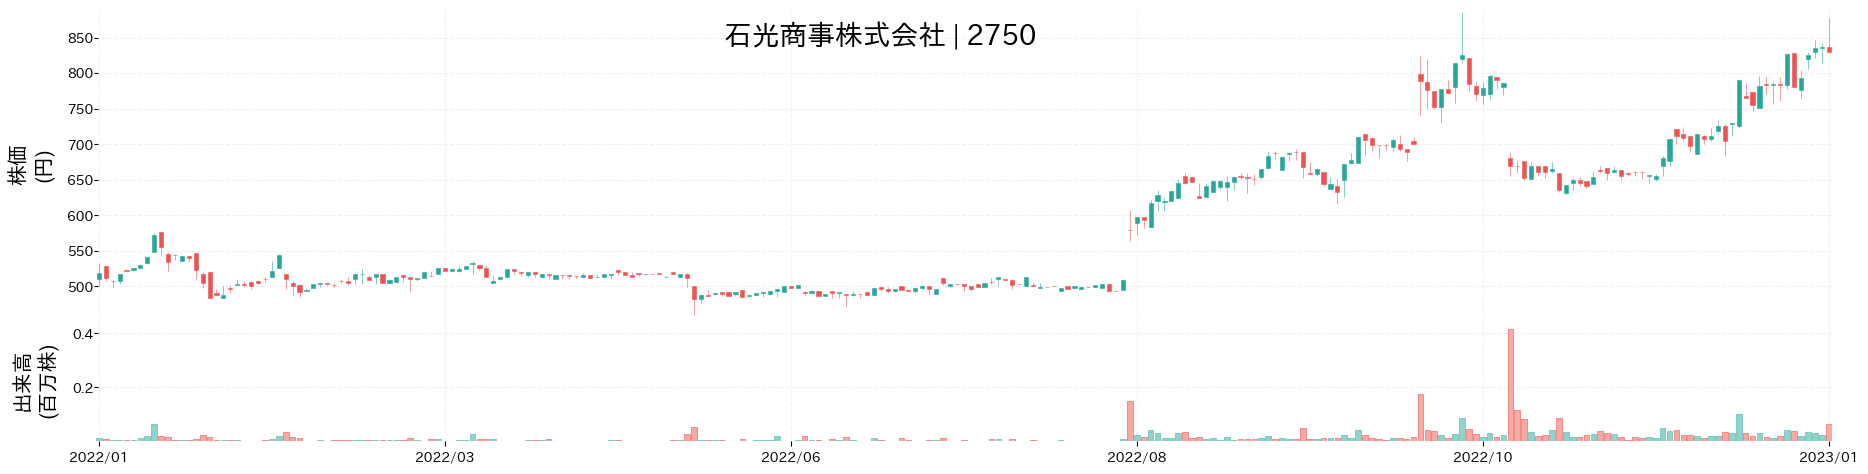 石光商事の株価推移(2022)